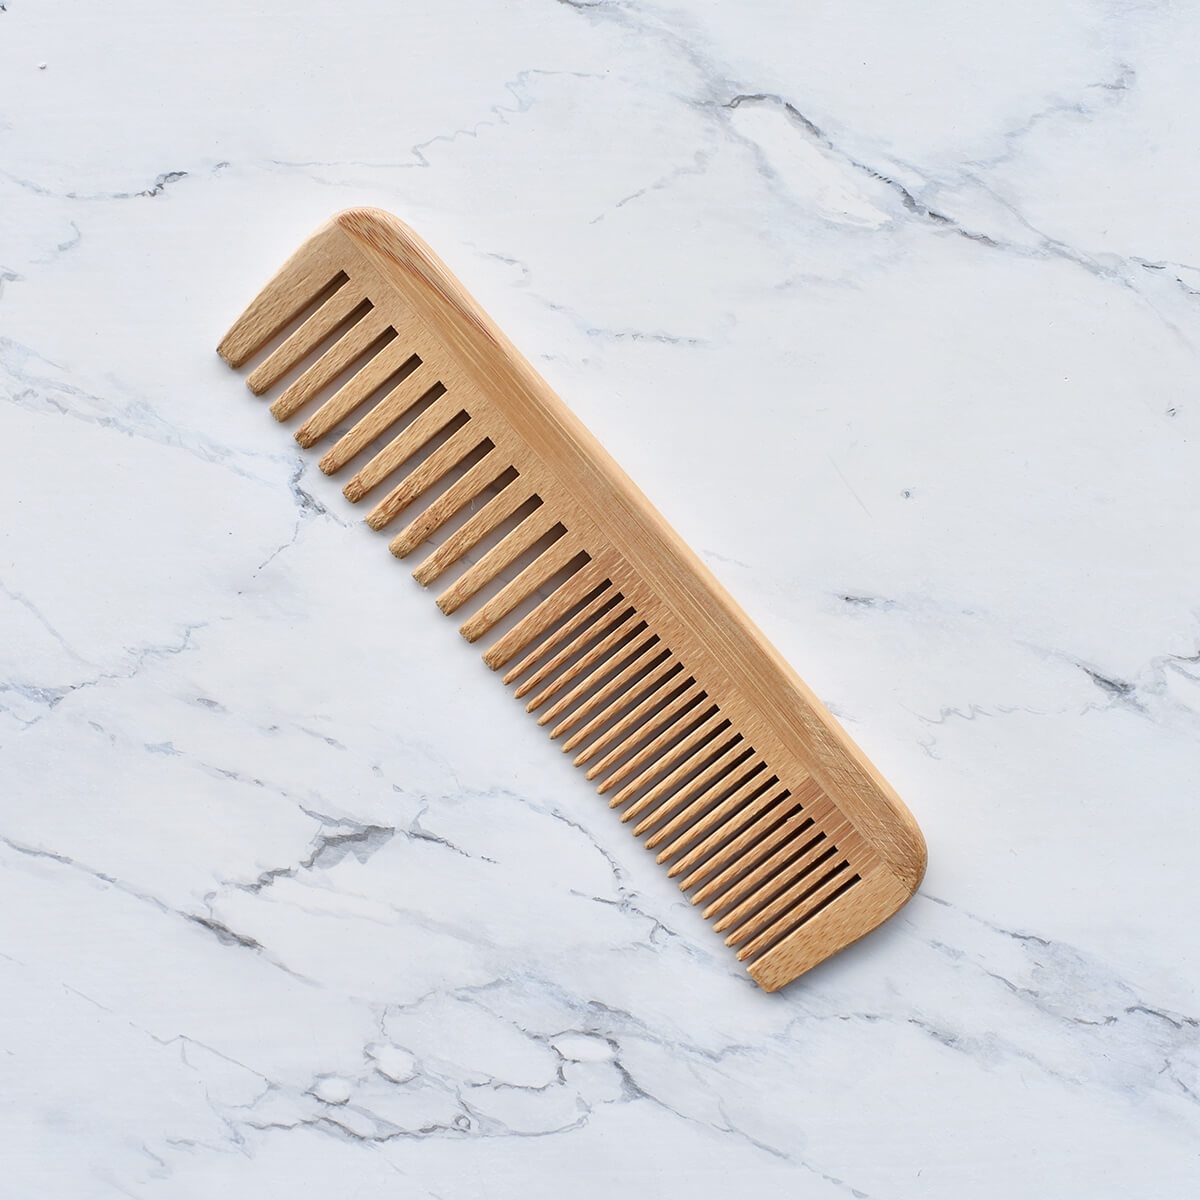 Croll & Denecke Bamboo Hair Comb